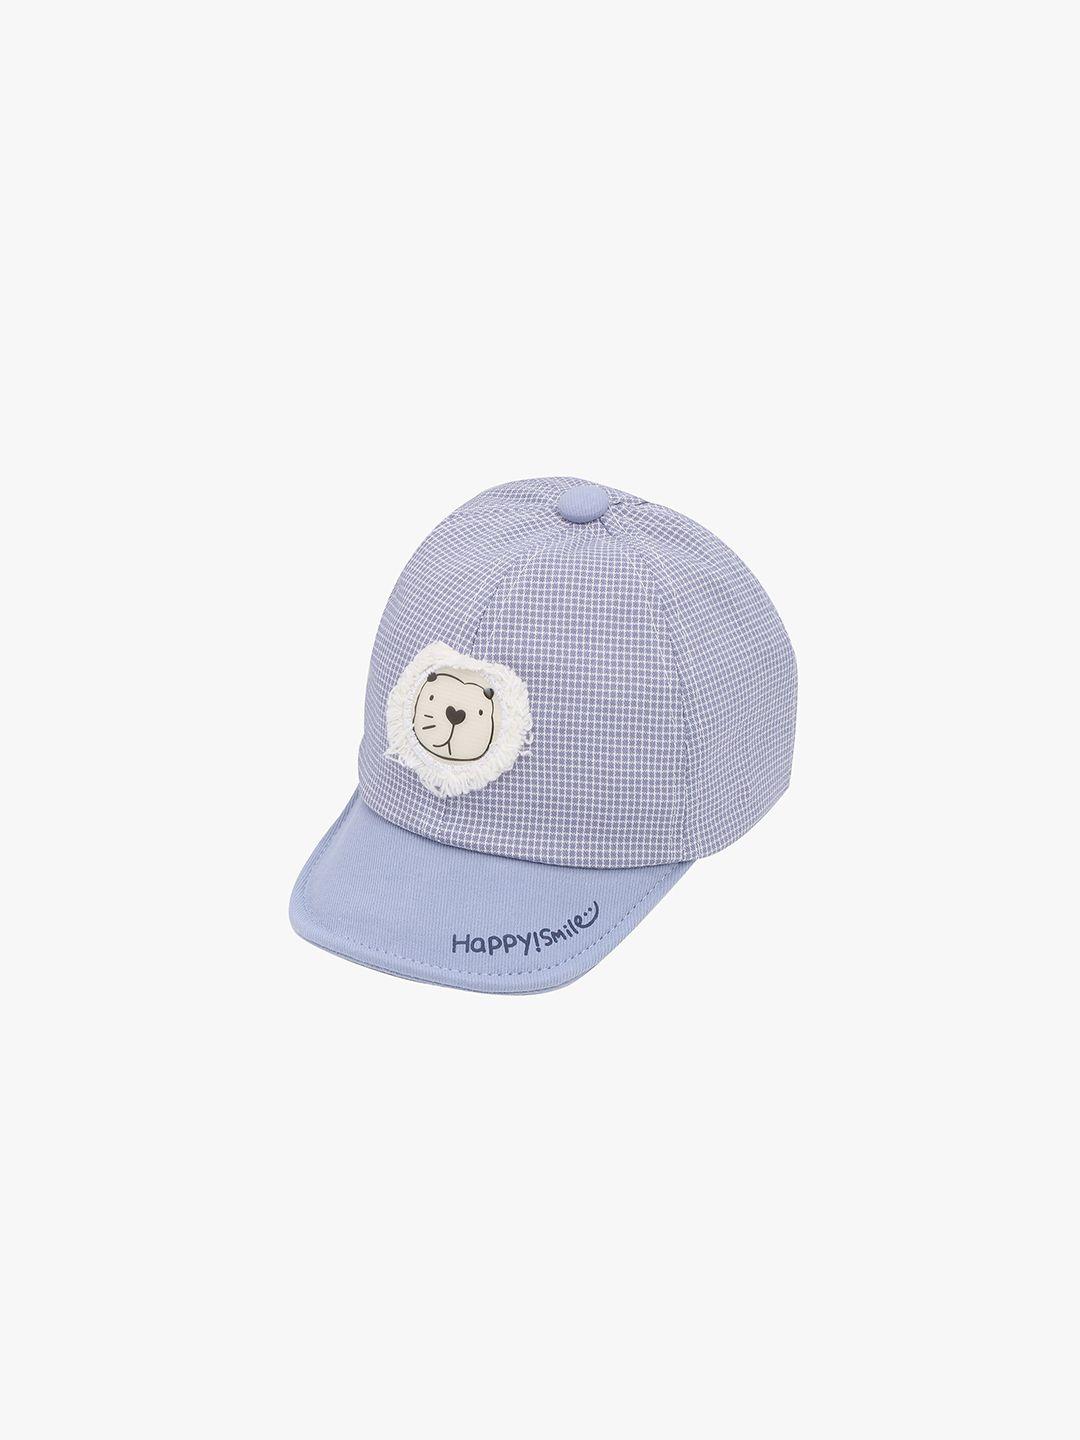 pokory unisex kids blue & white printed baseball cap